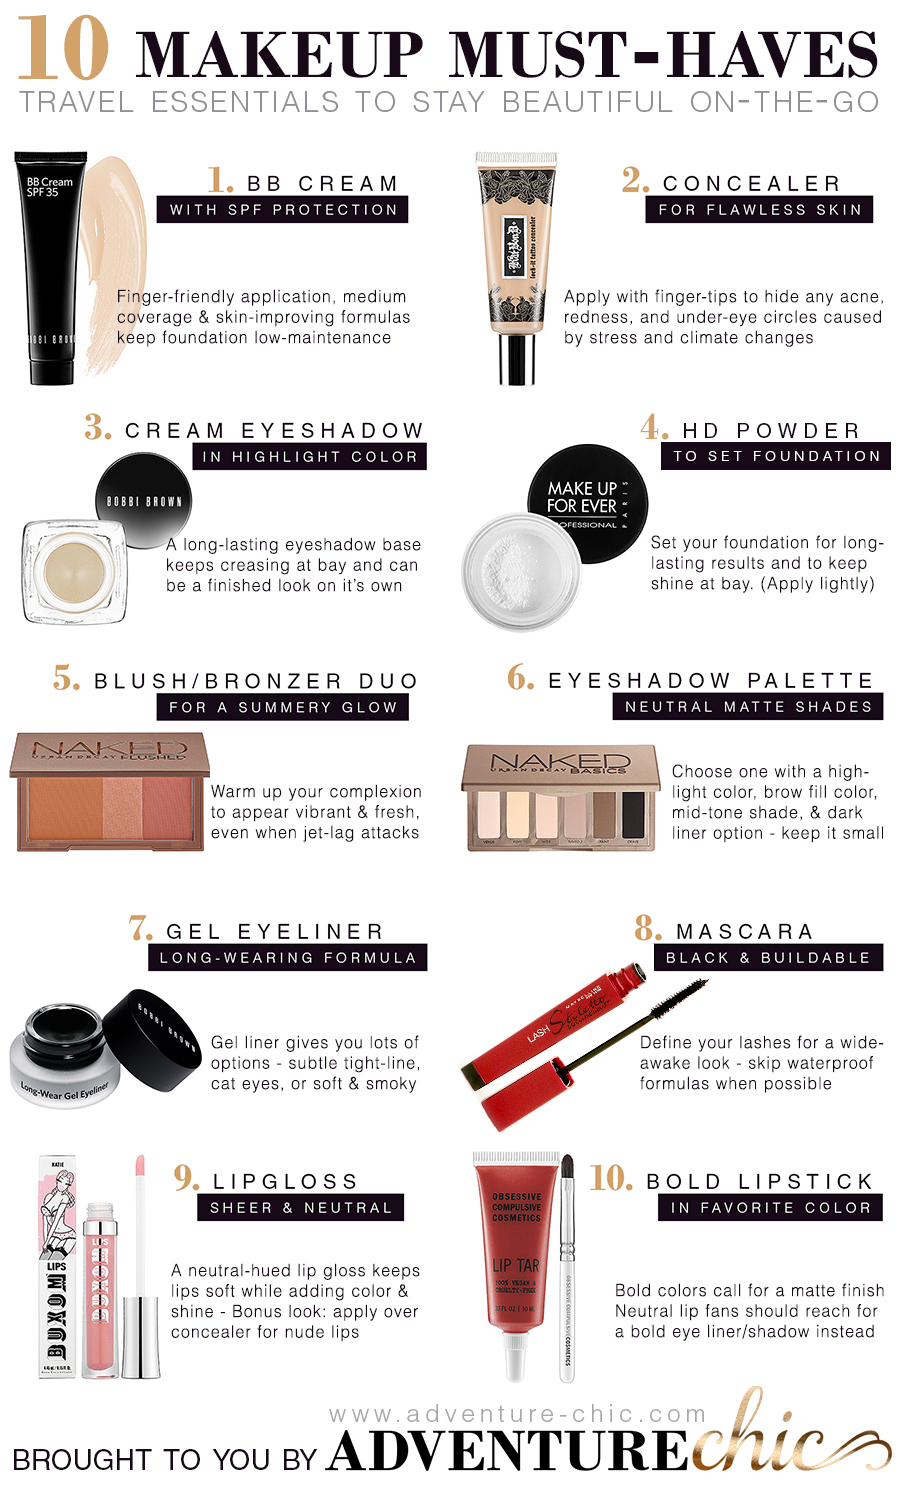 basic makeup list for beginners